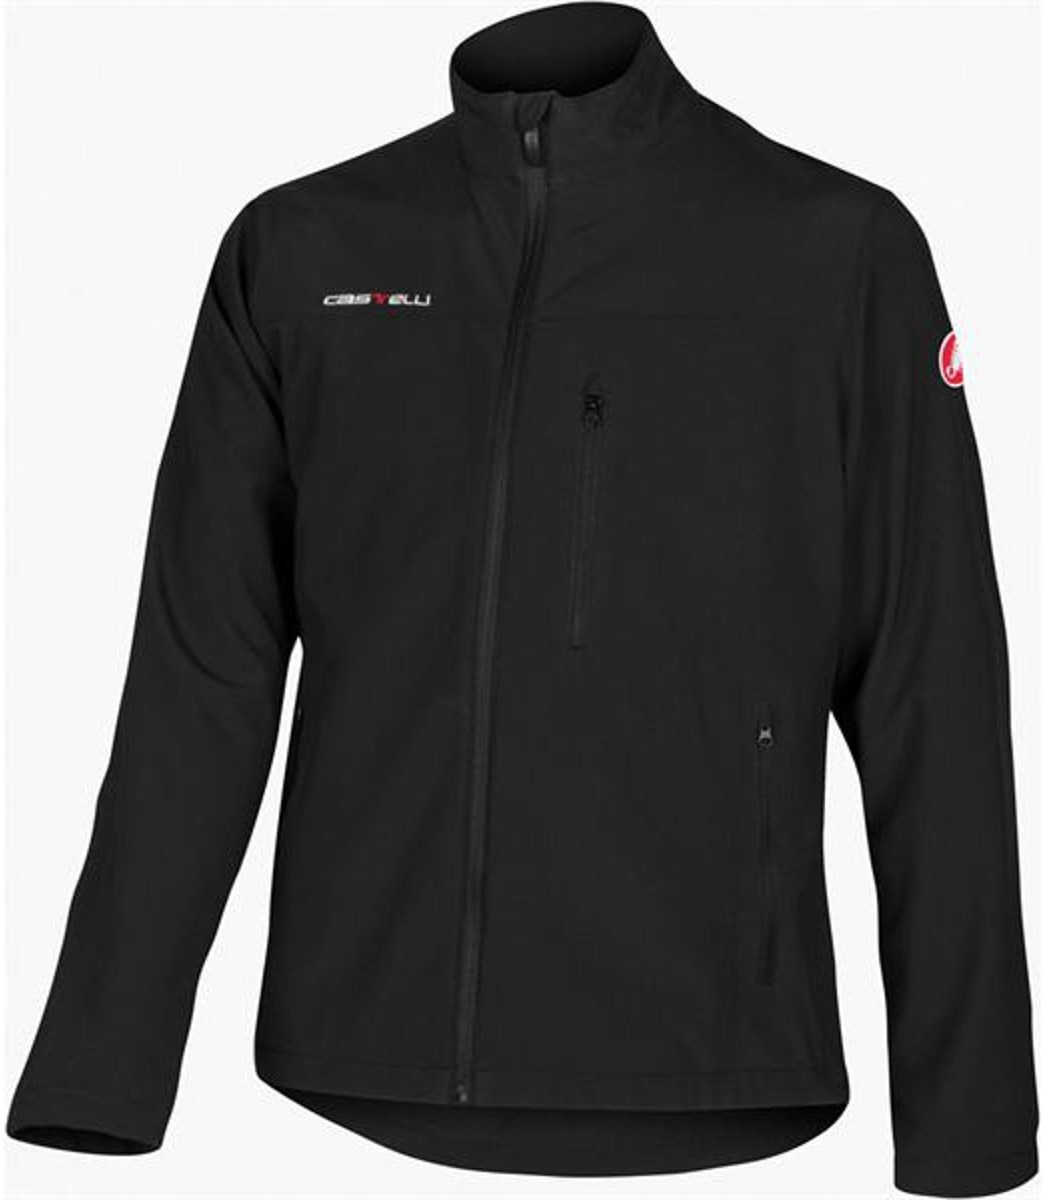 Castelli Race Day Cycling Jacket product image